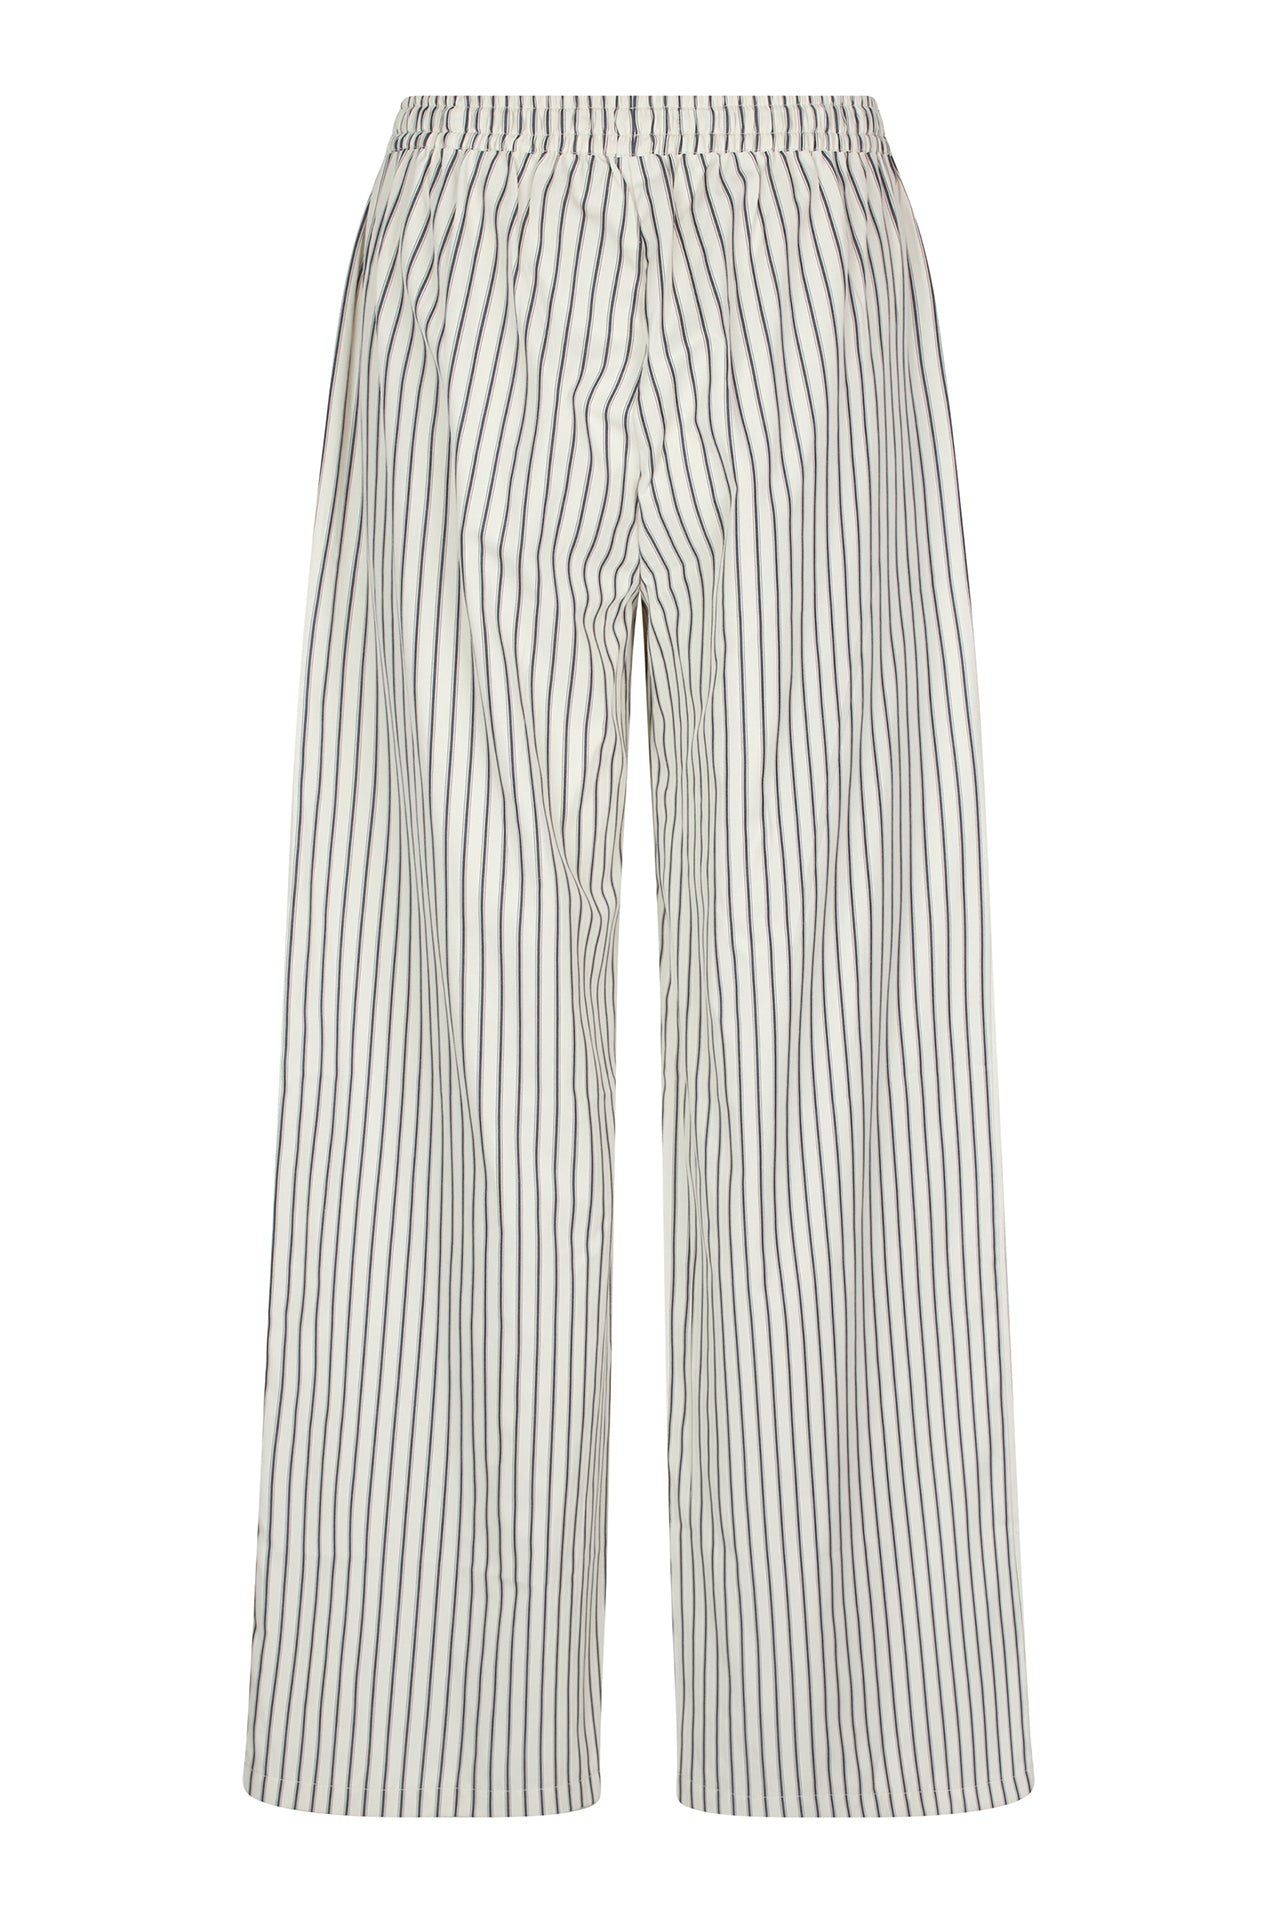 Lollys Laundry RitaLL Pants Pants 80 Stripe